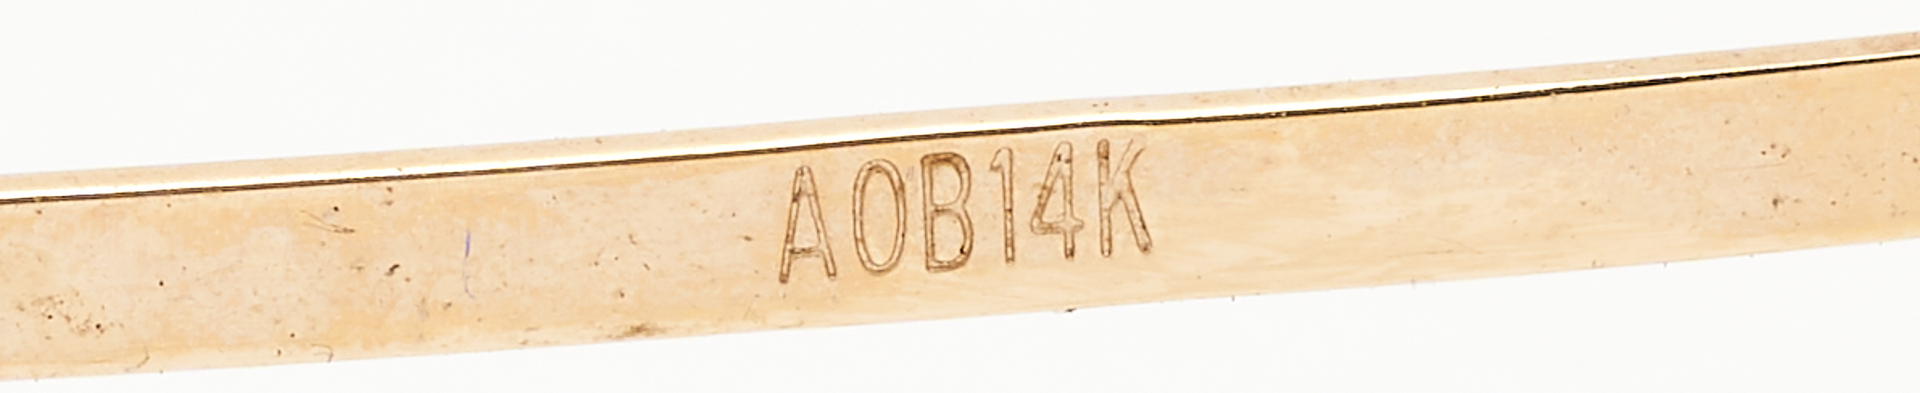 Lot 271: 14K Bangle Bracelet & 18K Hieroglyphic Pendant, 2 items